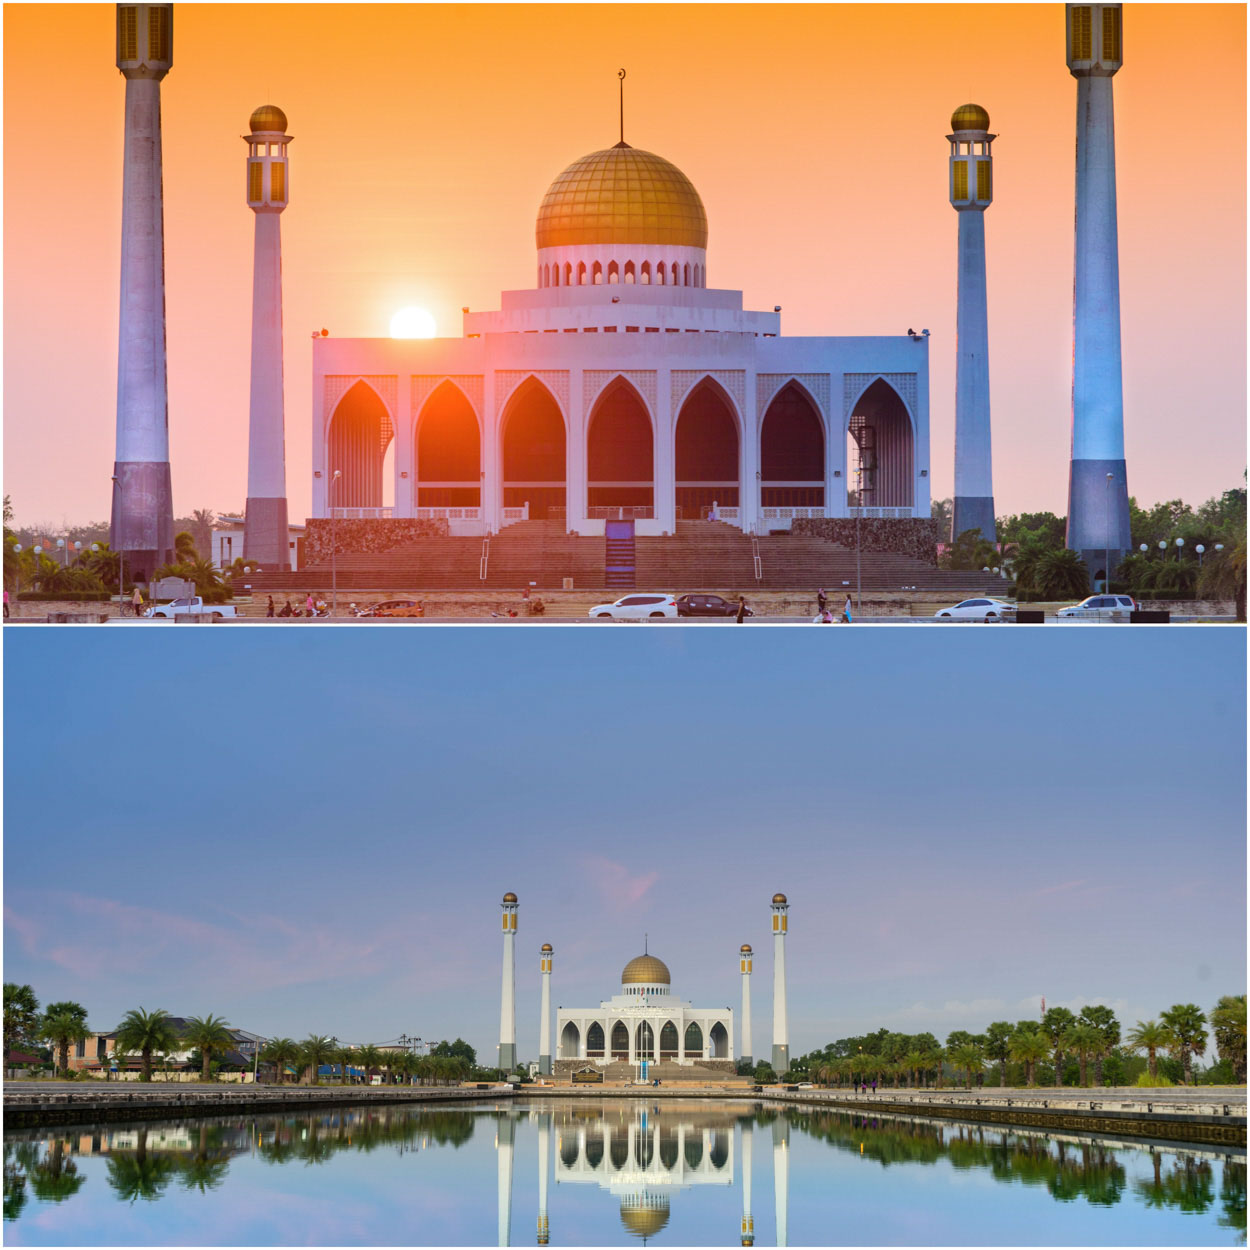 Grand Mosque มัสยิดกลางสงขลา ที่เที่ยวสงขลาเชิงวัฒนธรรมที่สวยงาม เย็นๆ สามารถเก็บรูปขณะที่ดวงอาทิตย์ตกด้านหน้ามัสยิดได้อีกด้วย